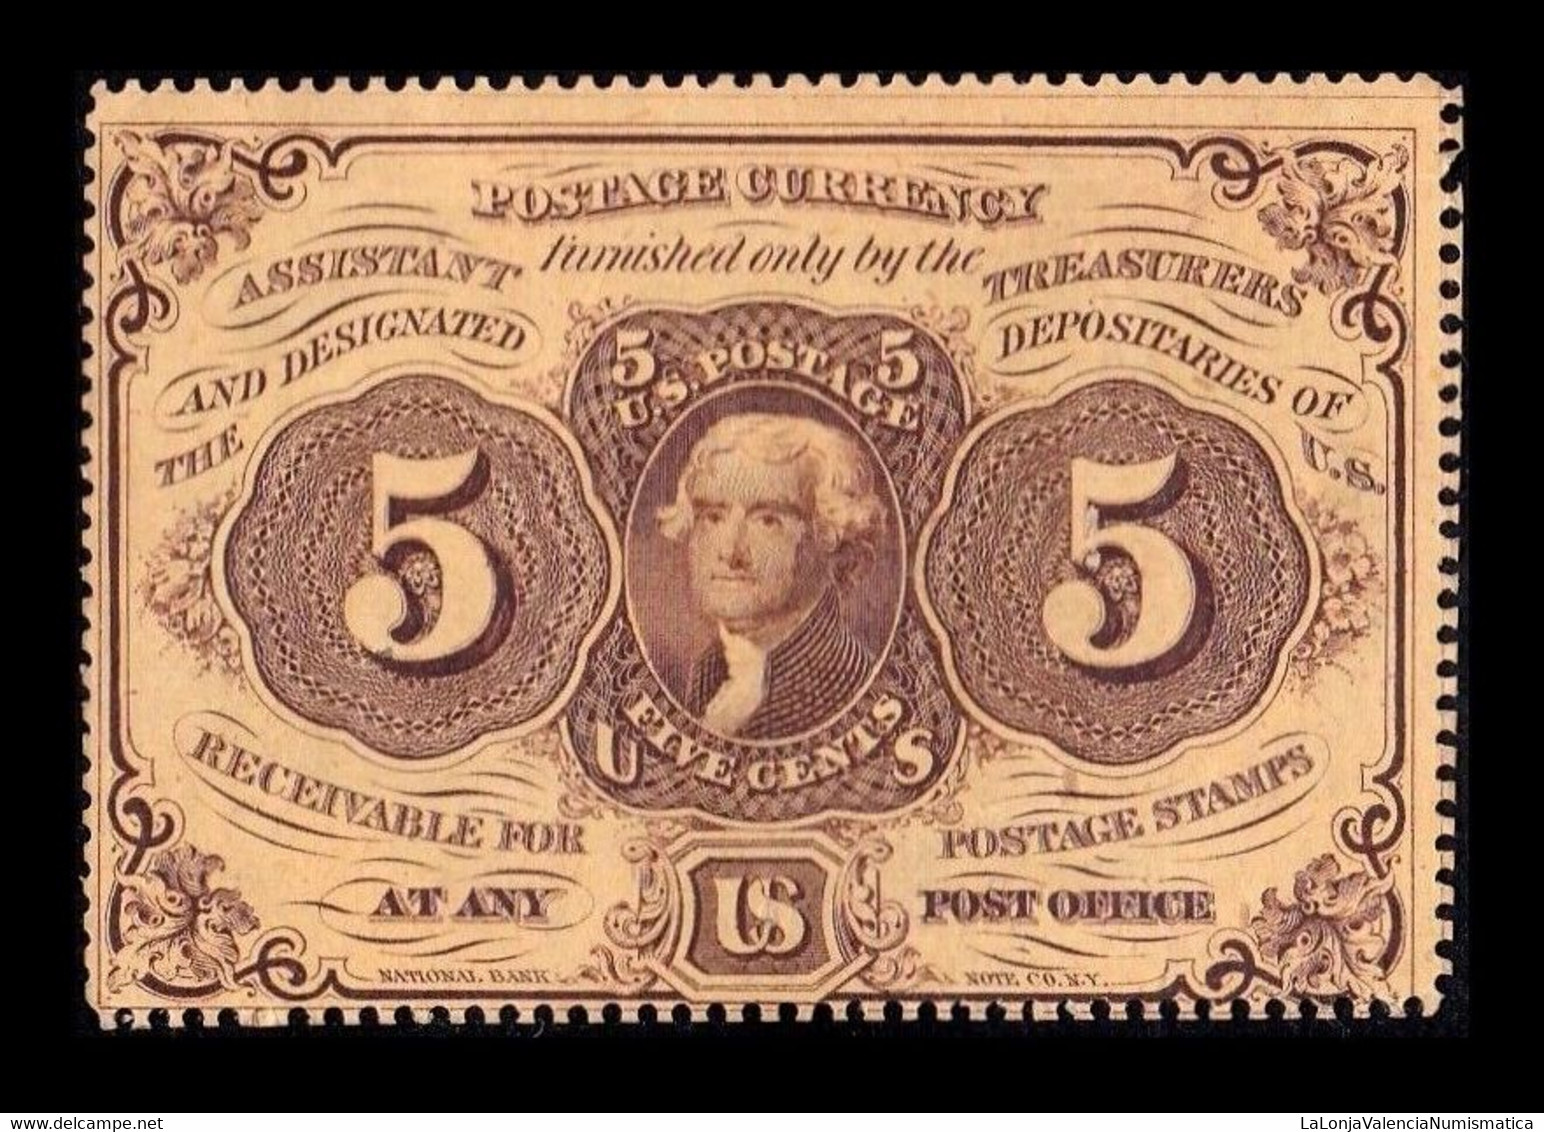 Estados Unidos United States 5 Cents George Washington 1862 Pick 97a EBC+ XF+ - 1862 : 1° Emission